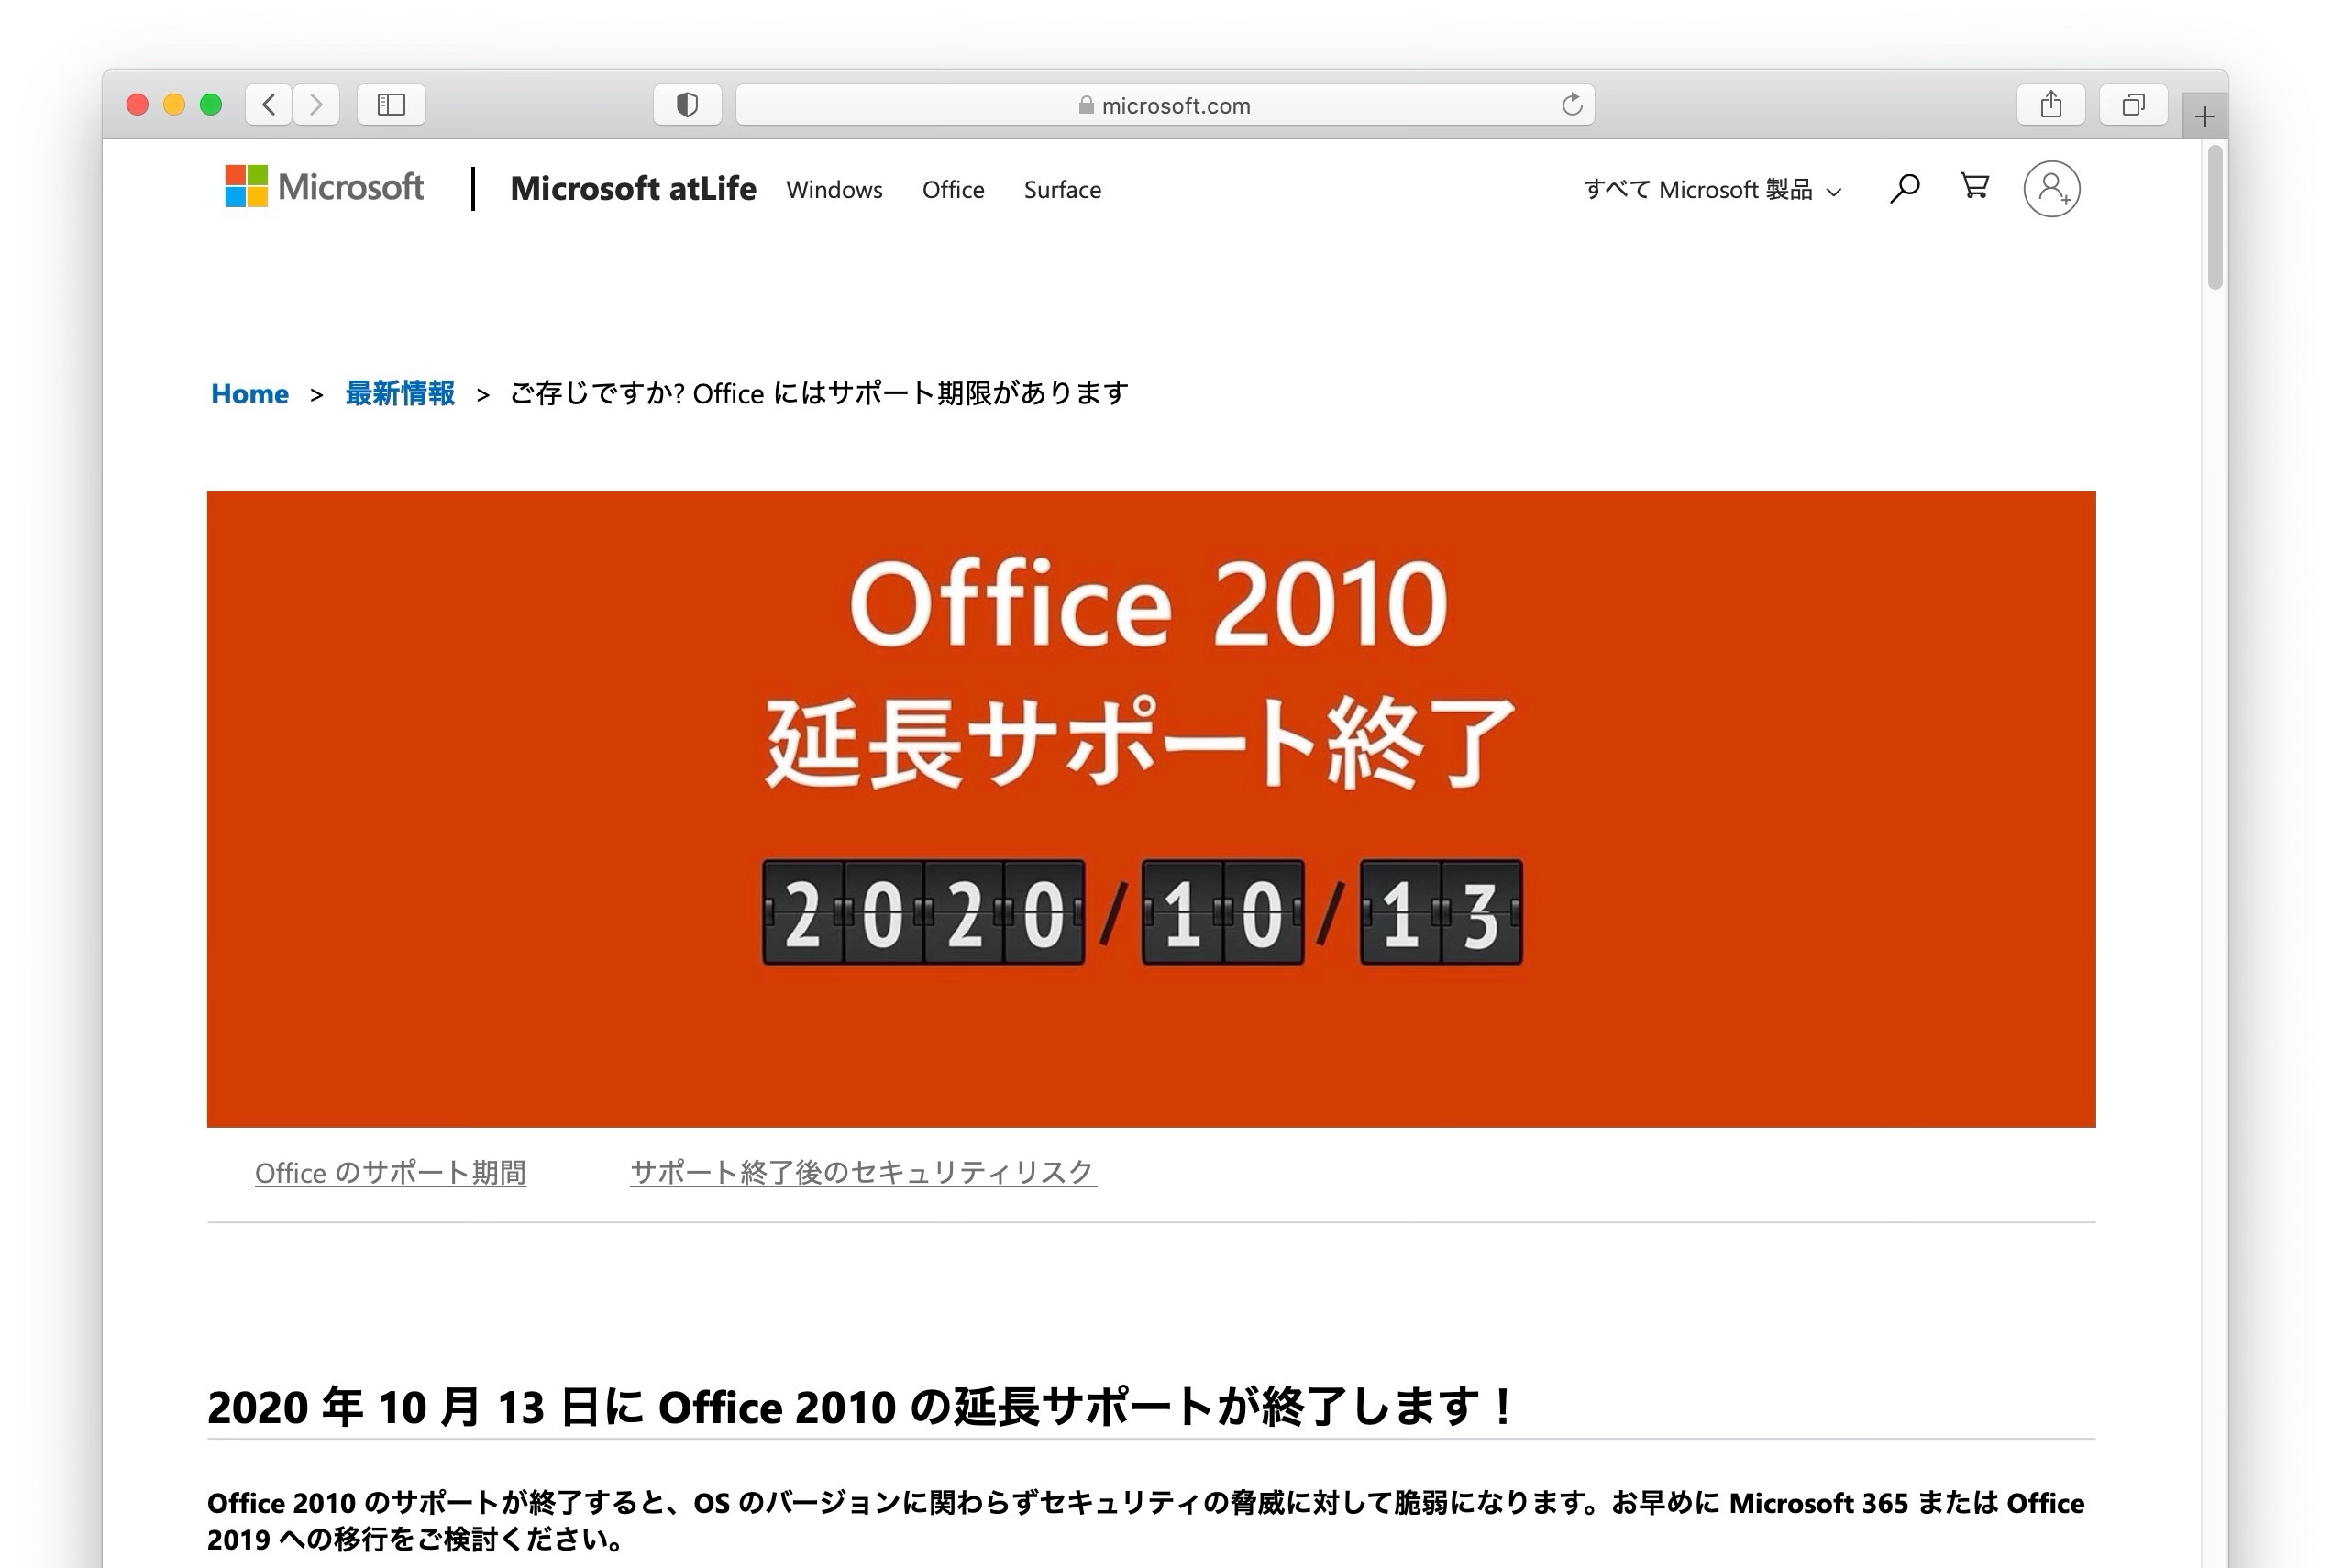 Office 2010 for Windows の延長サポートの終了